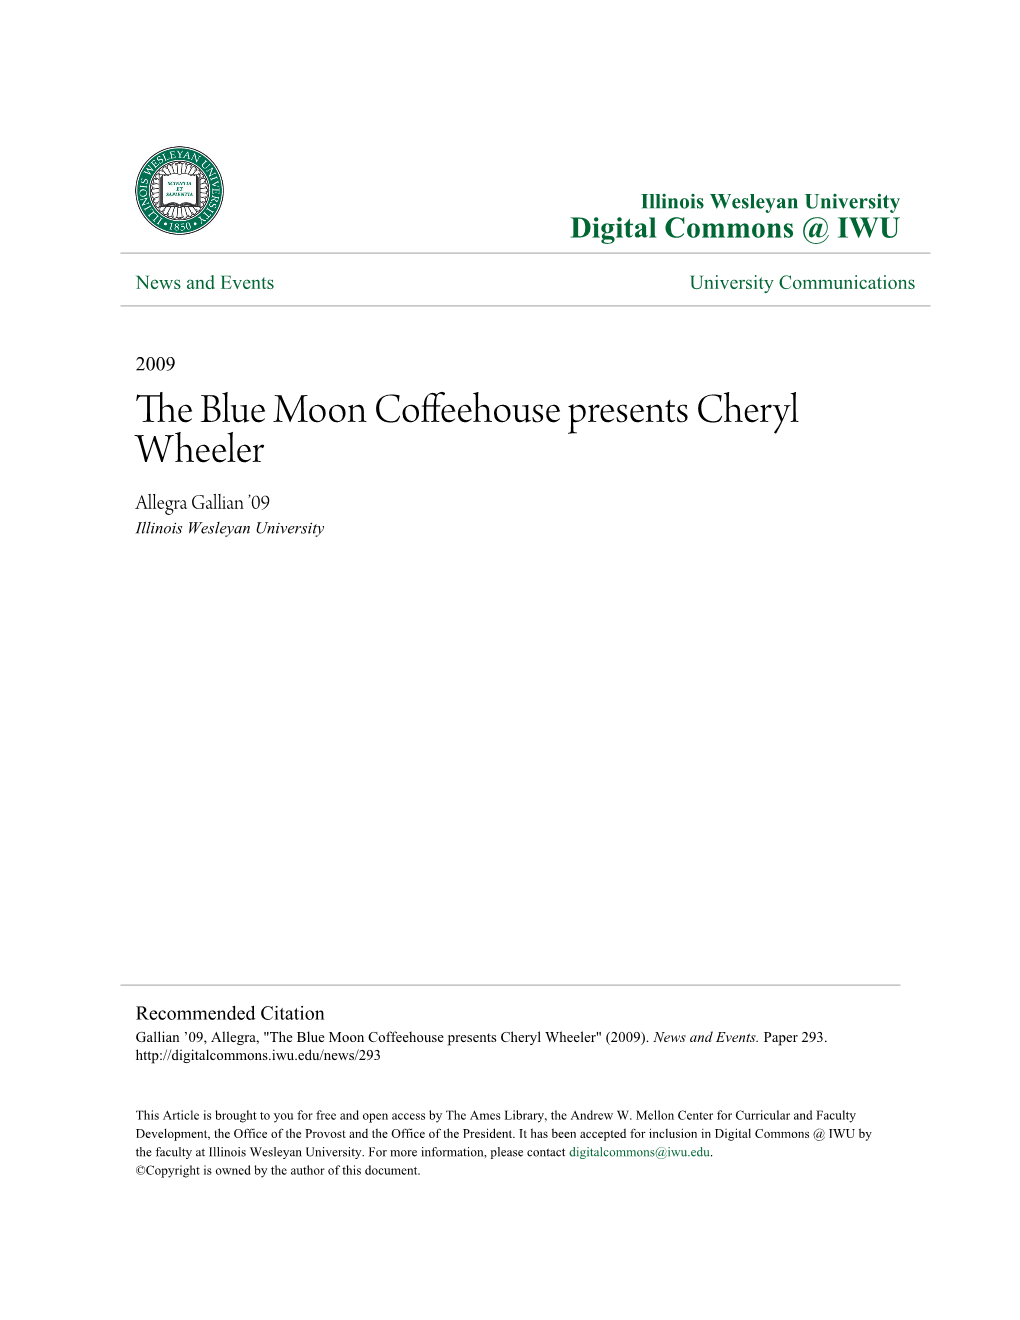 The Blue Moon Coffeehouse Presents Cheryl Wheeler" (2009)